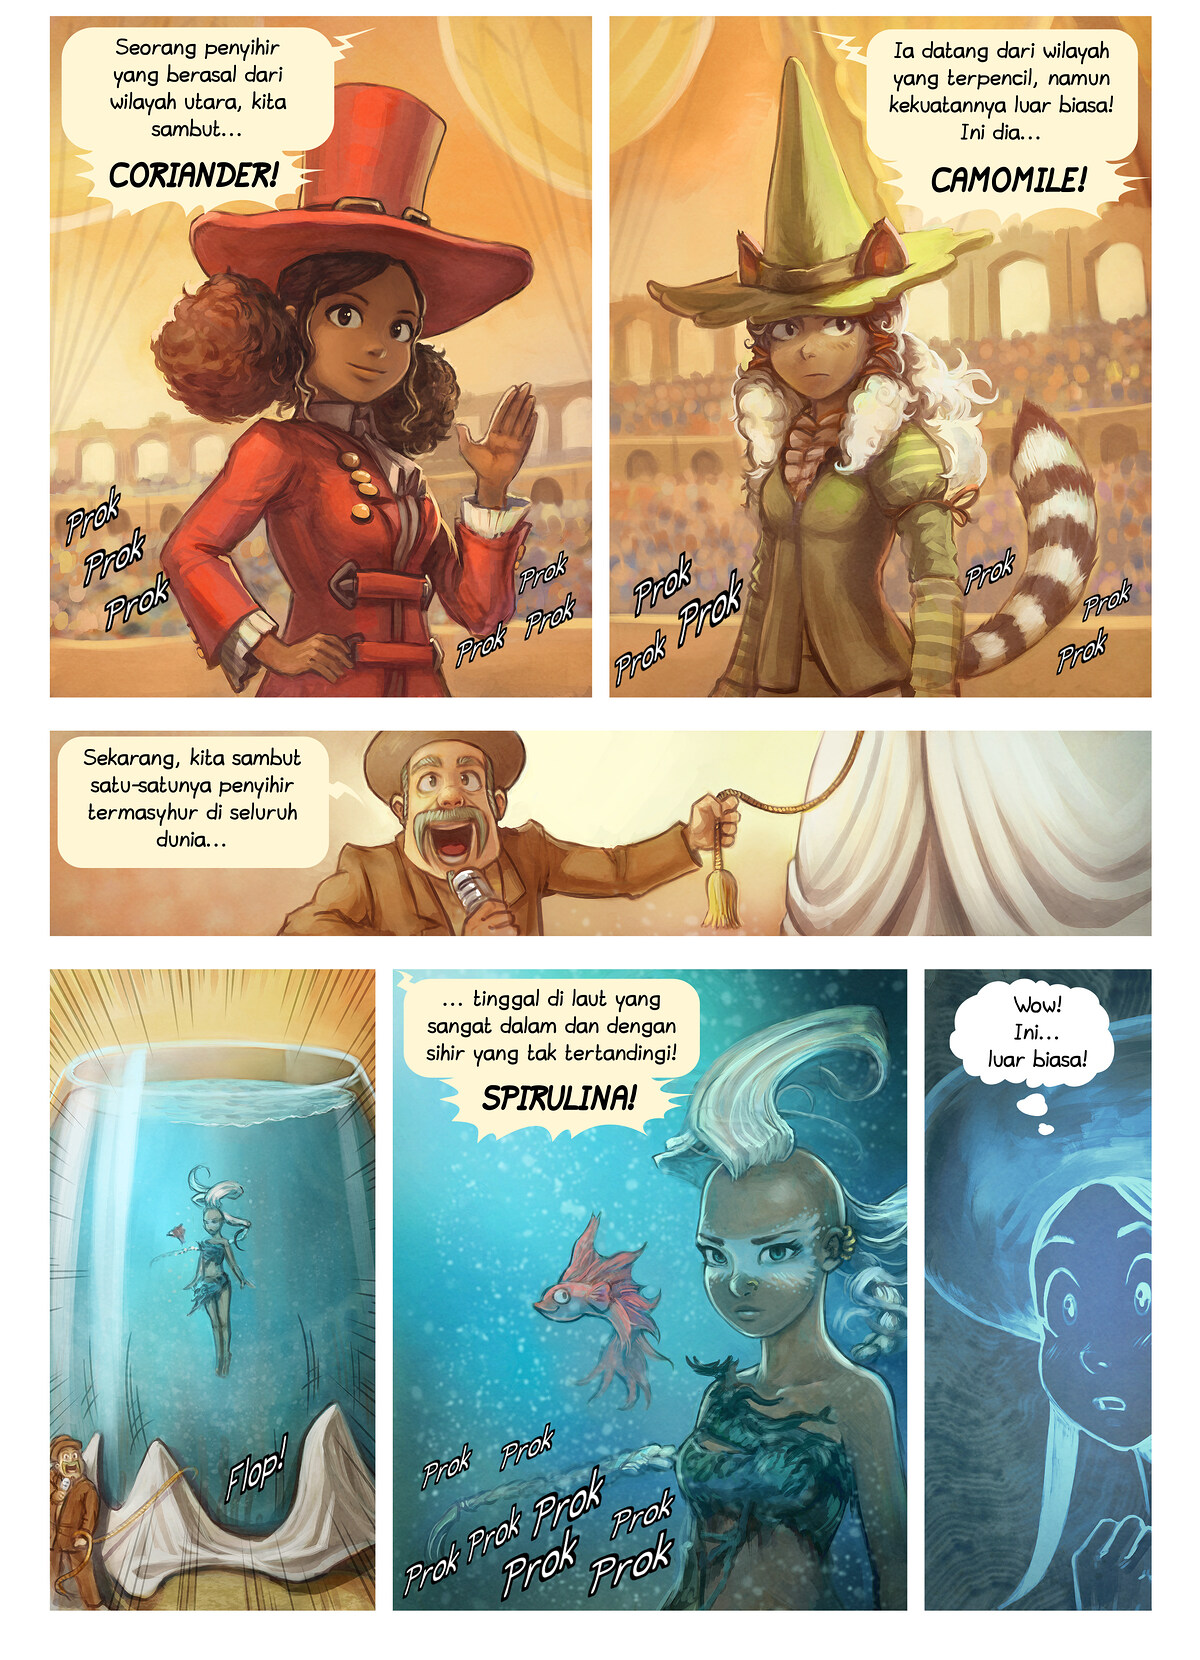 Episode 21: Perlombaan sihir, Page 4